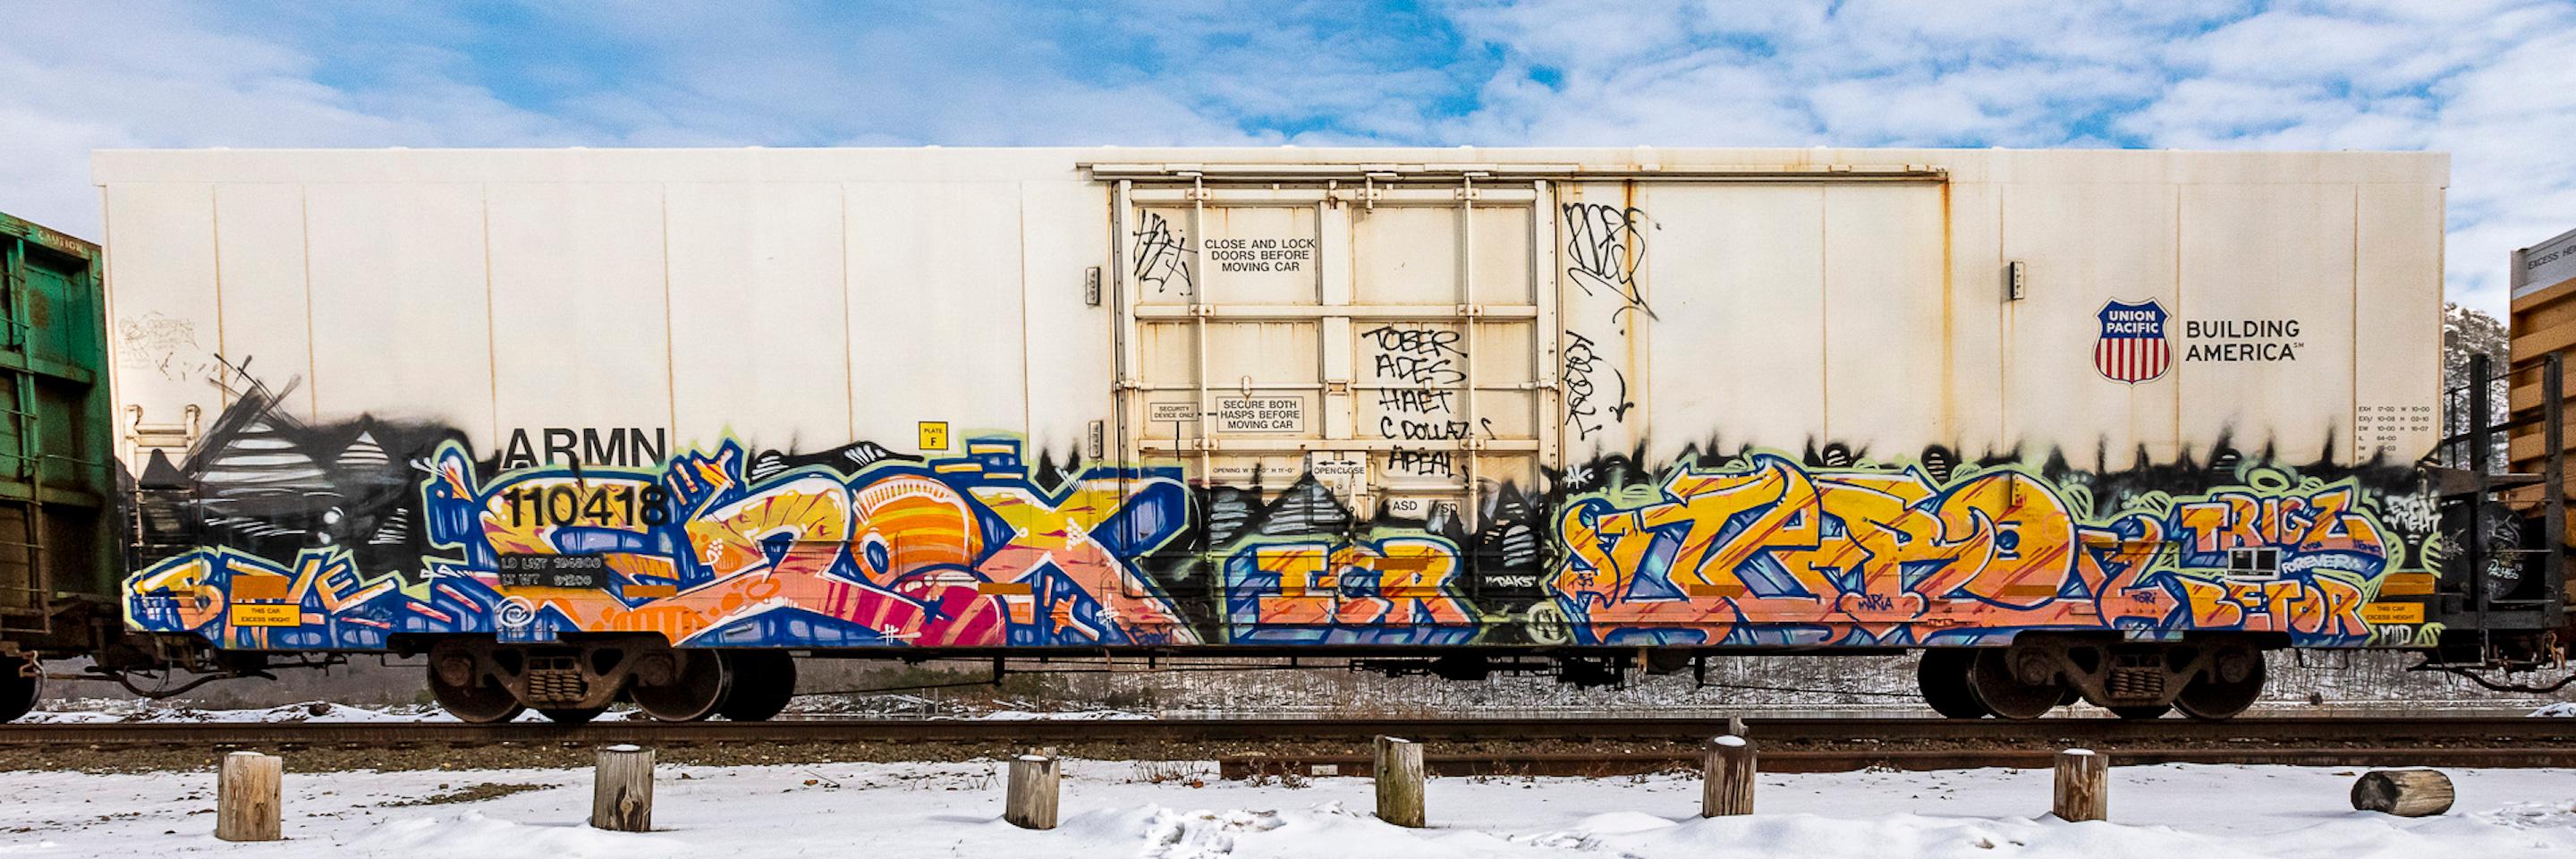 Stephen Mallon Figurative Photograph - "Armn 110418" Graffiti painted railroad train car, limited edition photo 15"x45"